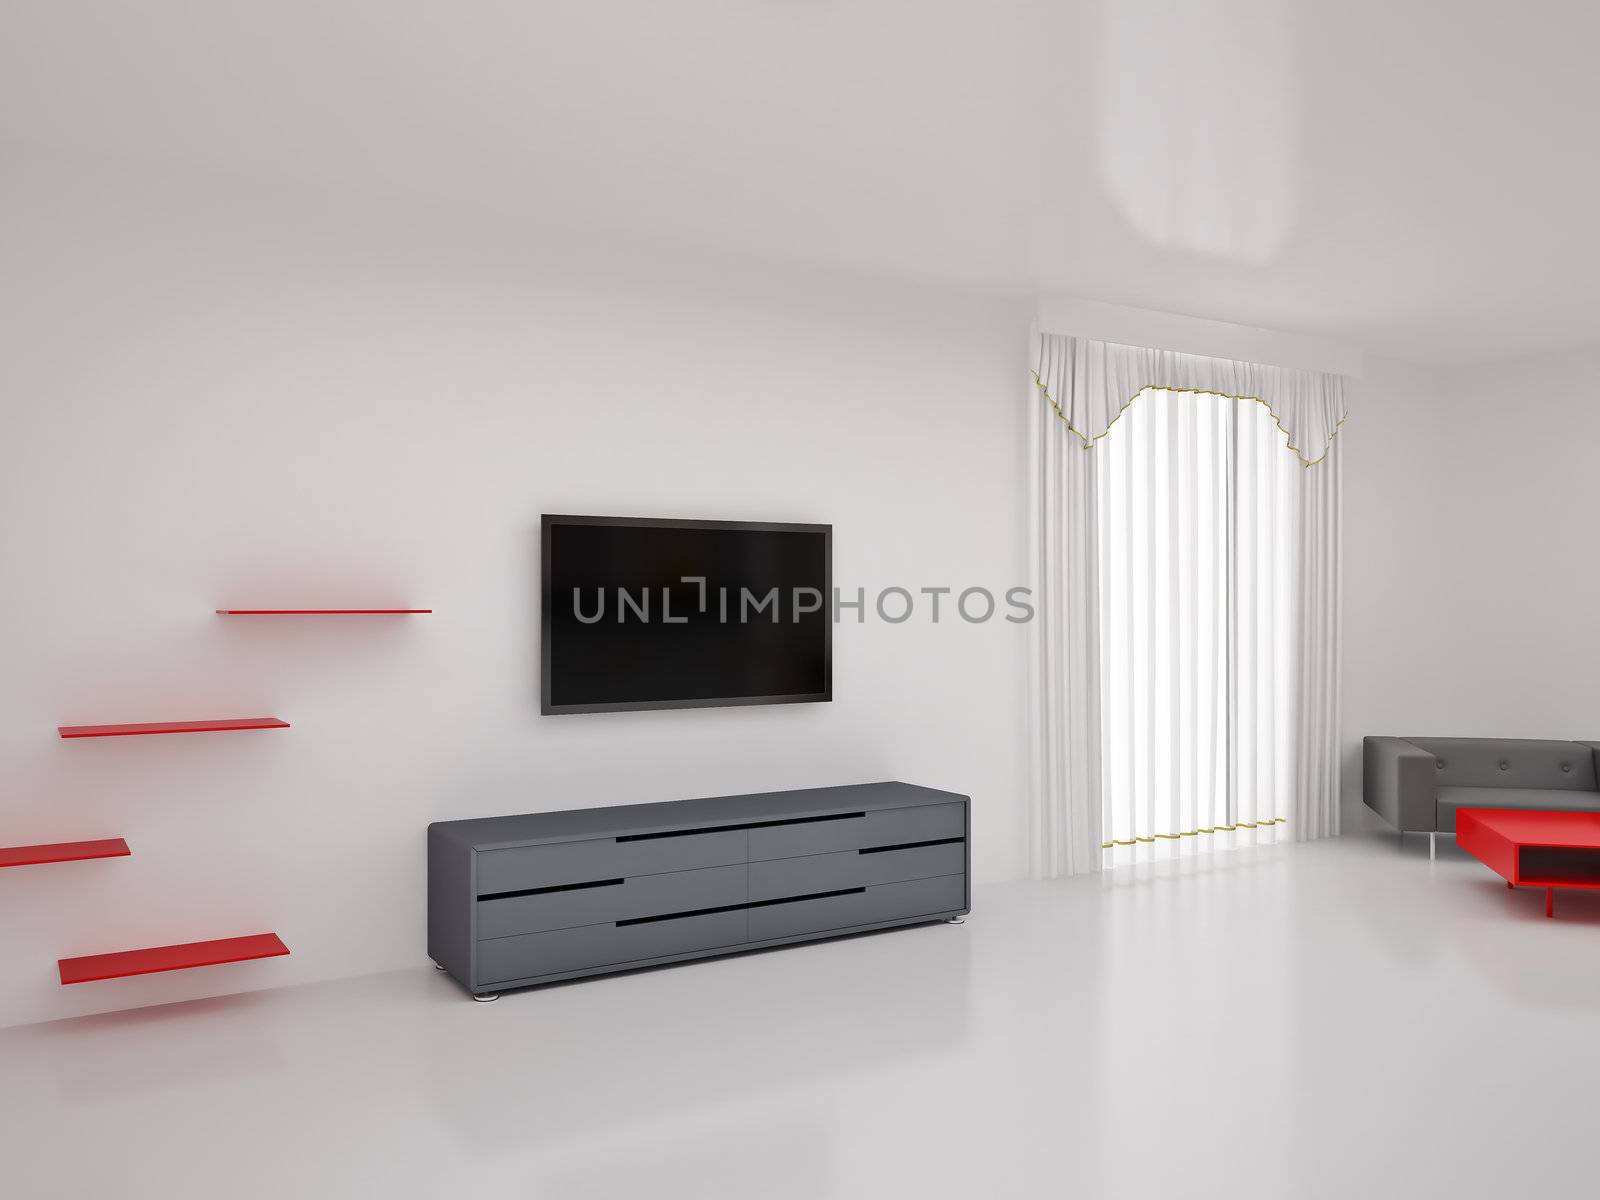 Modern TV in room. Interior of the modern room. High resolution image. 3d rendered illustration.